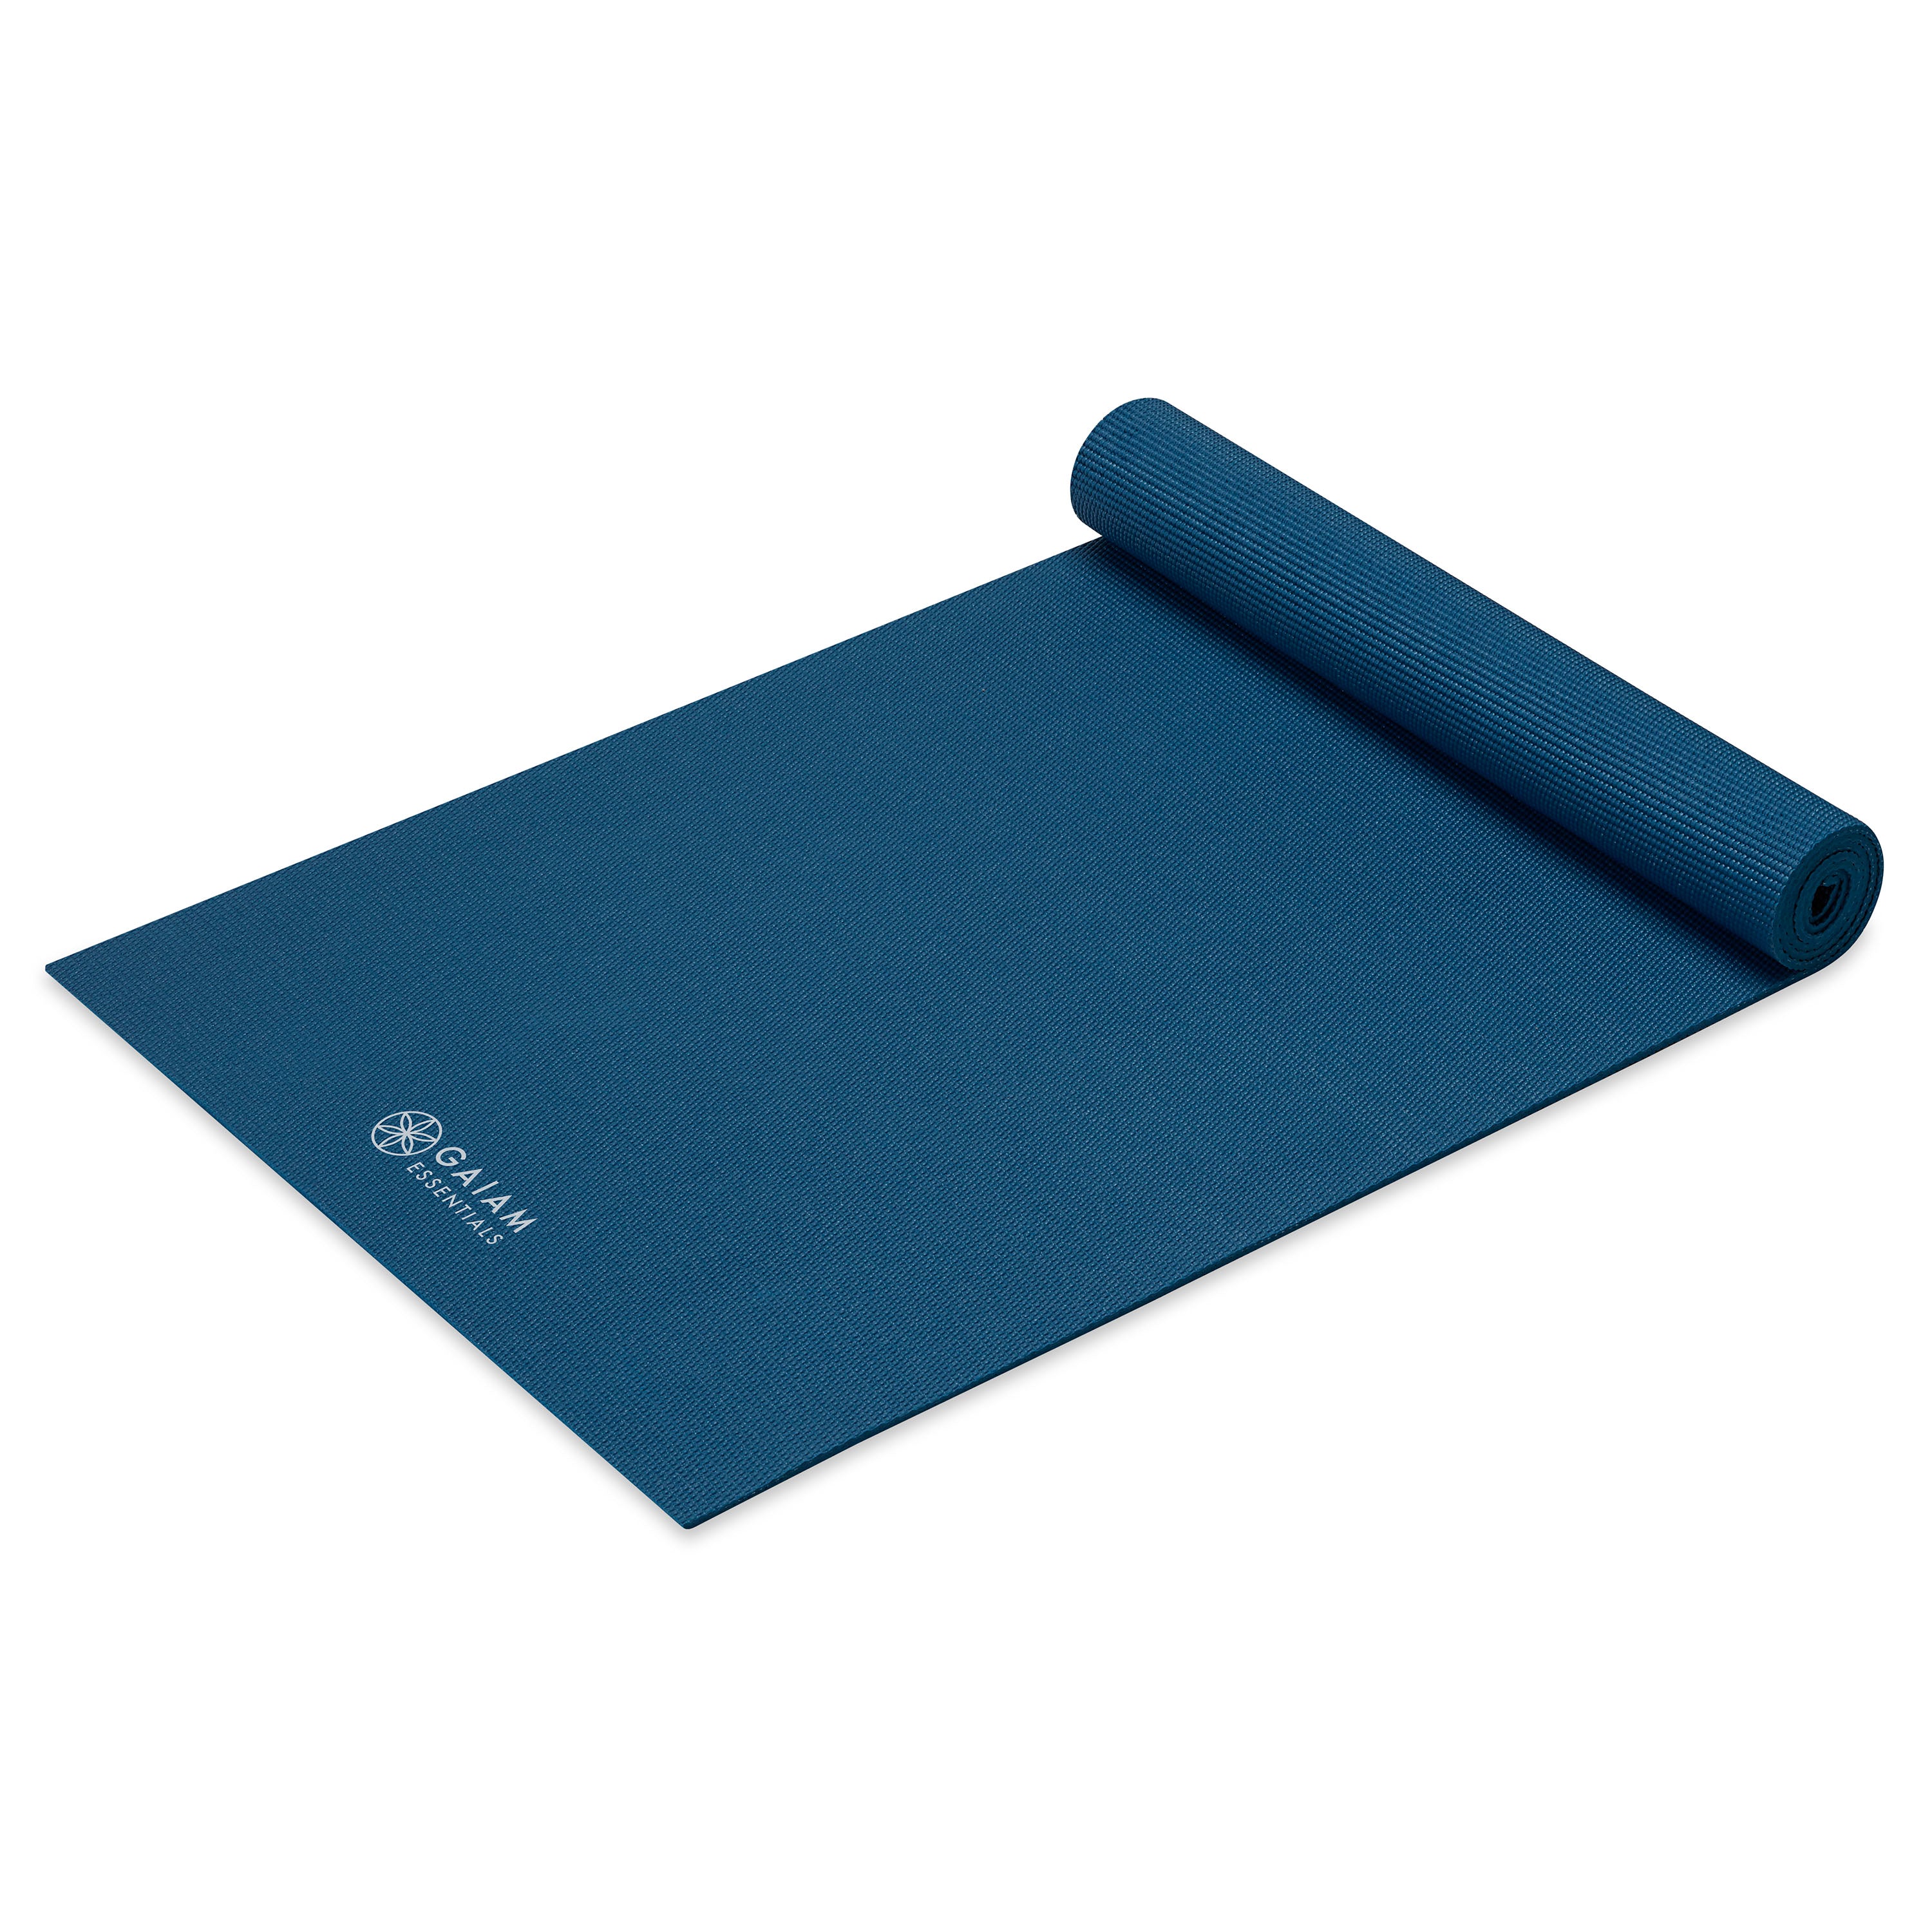 Gaiam Premium Lilac Feathers Yoga Mat (6mm) - ShopStyle Workout Accessories